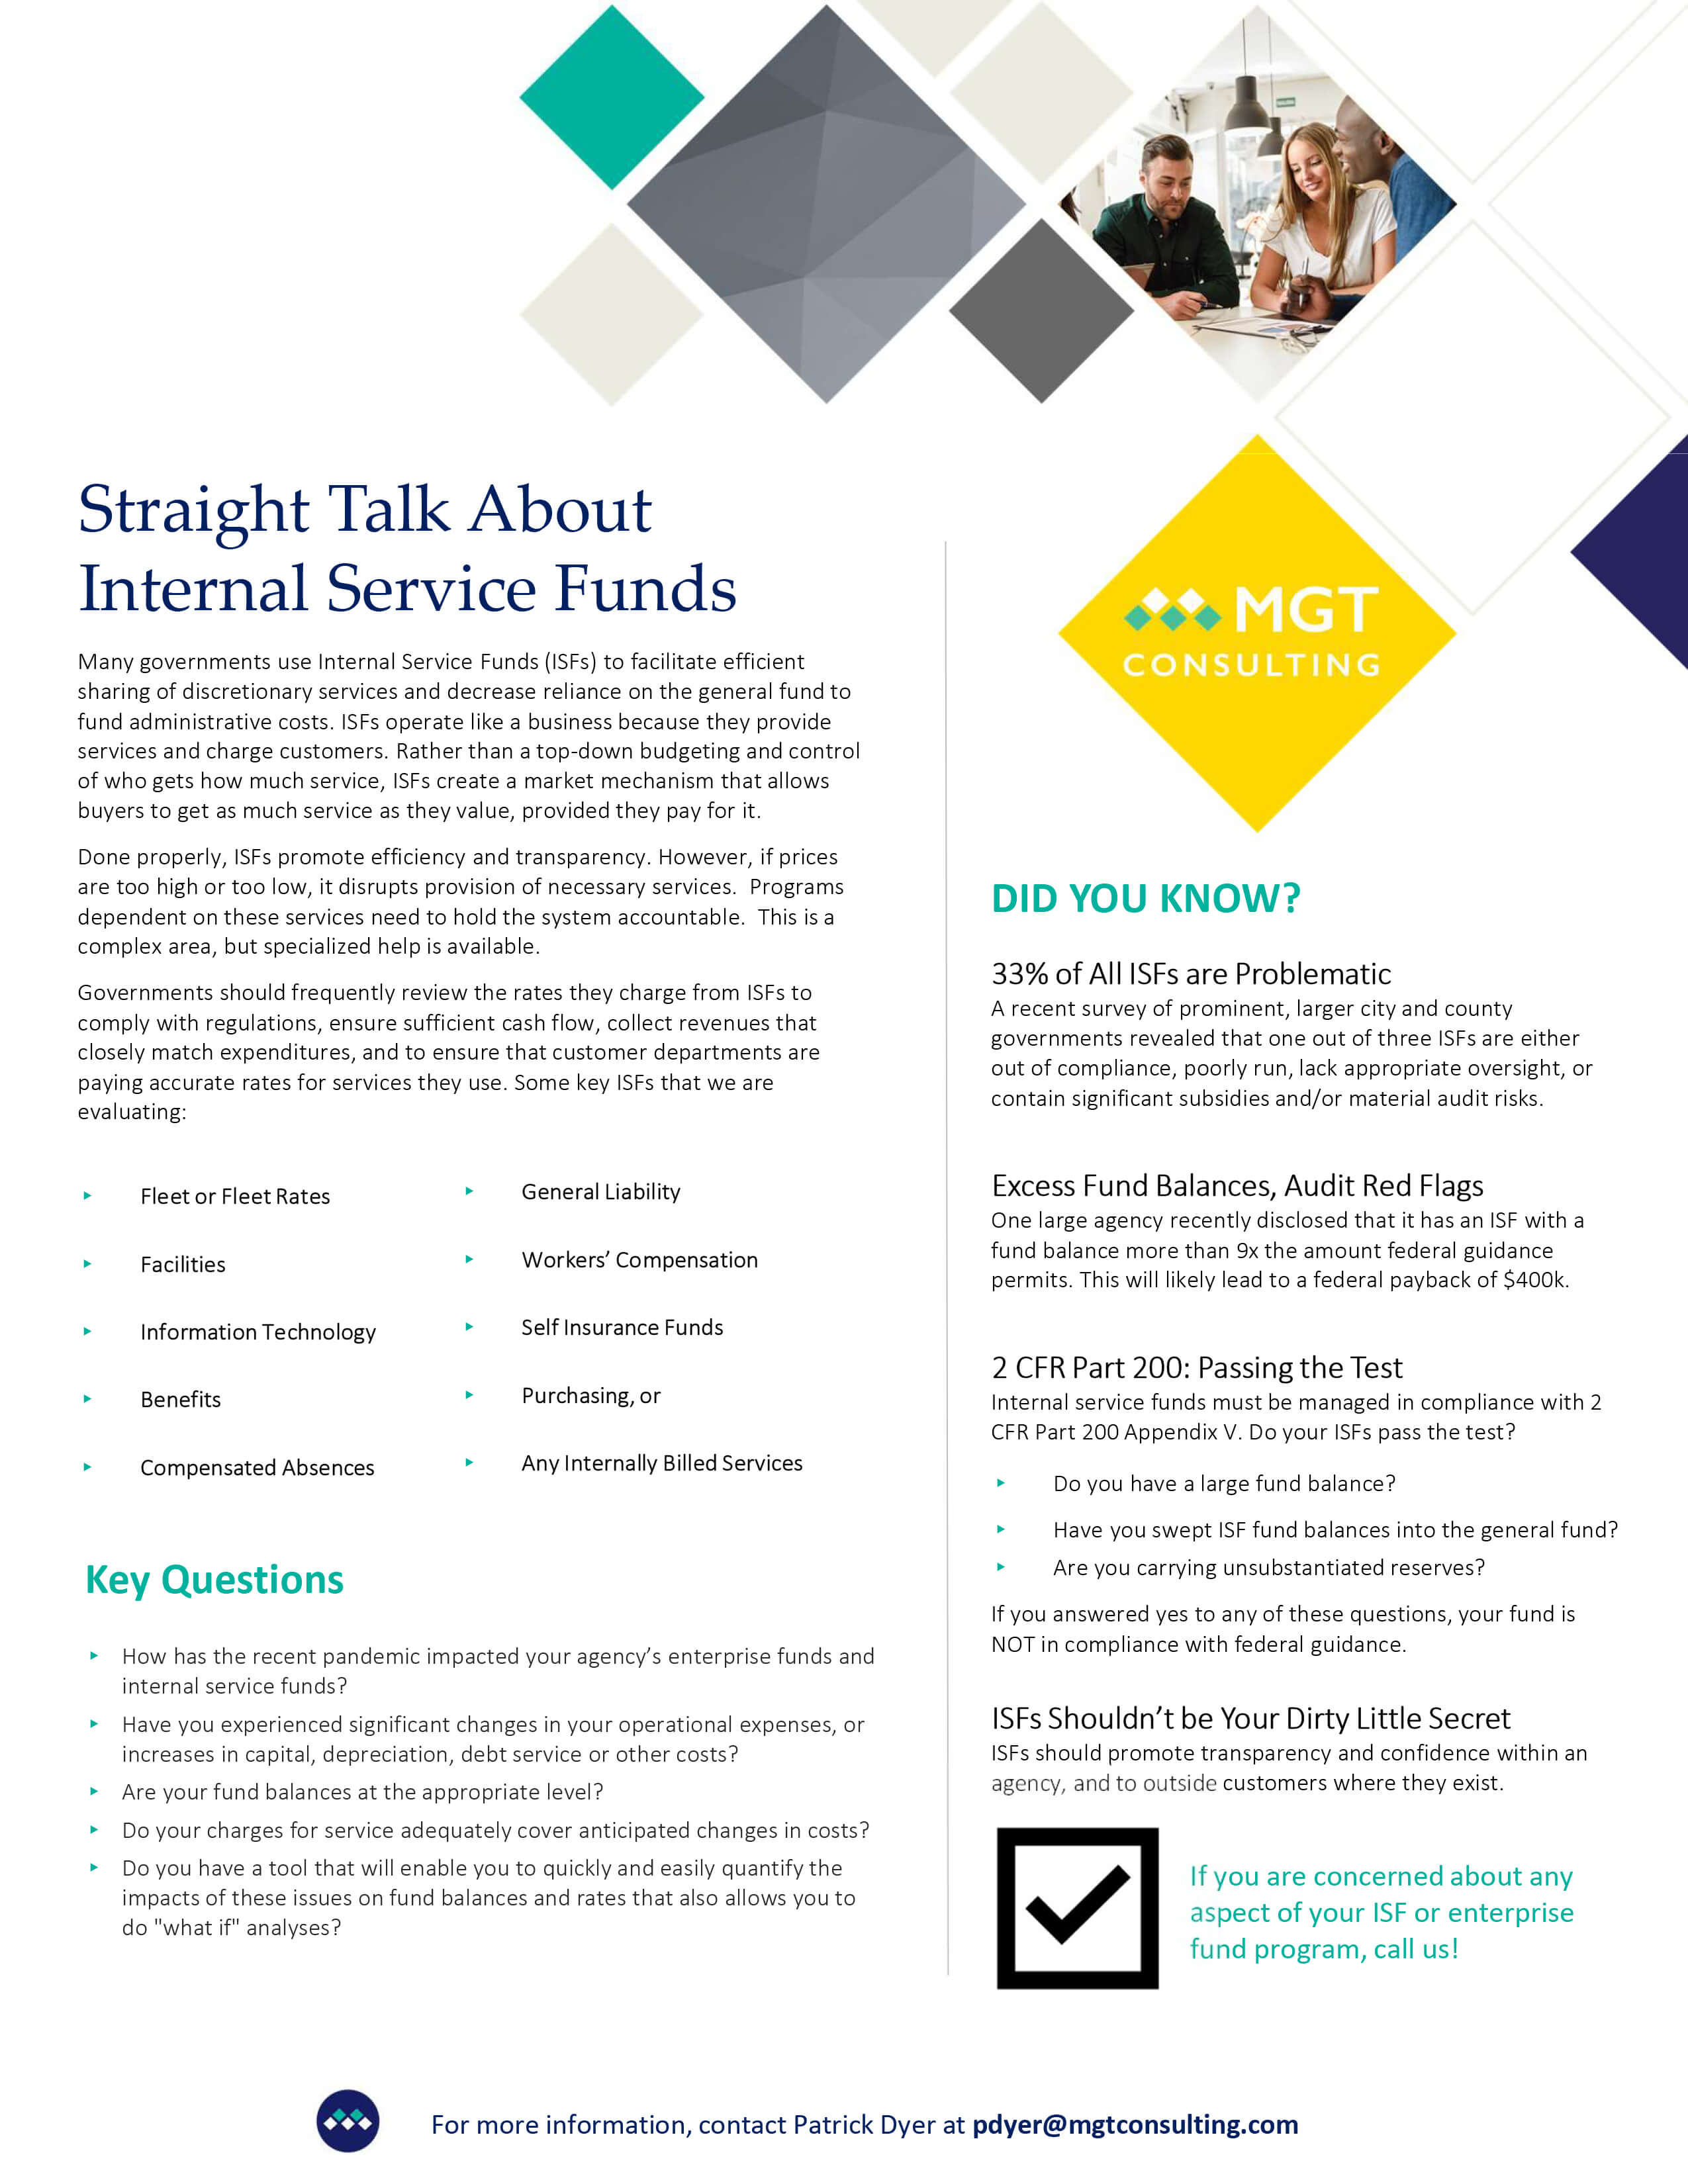 MGT Internal Service Funds 101